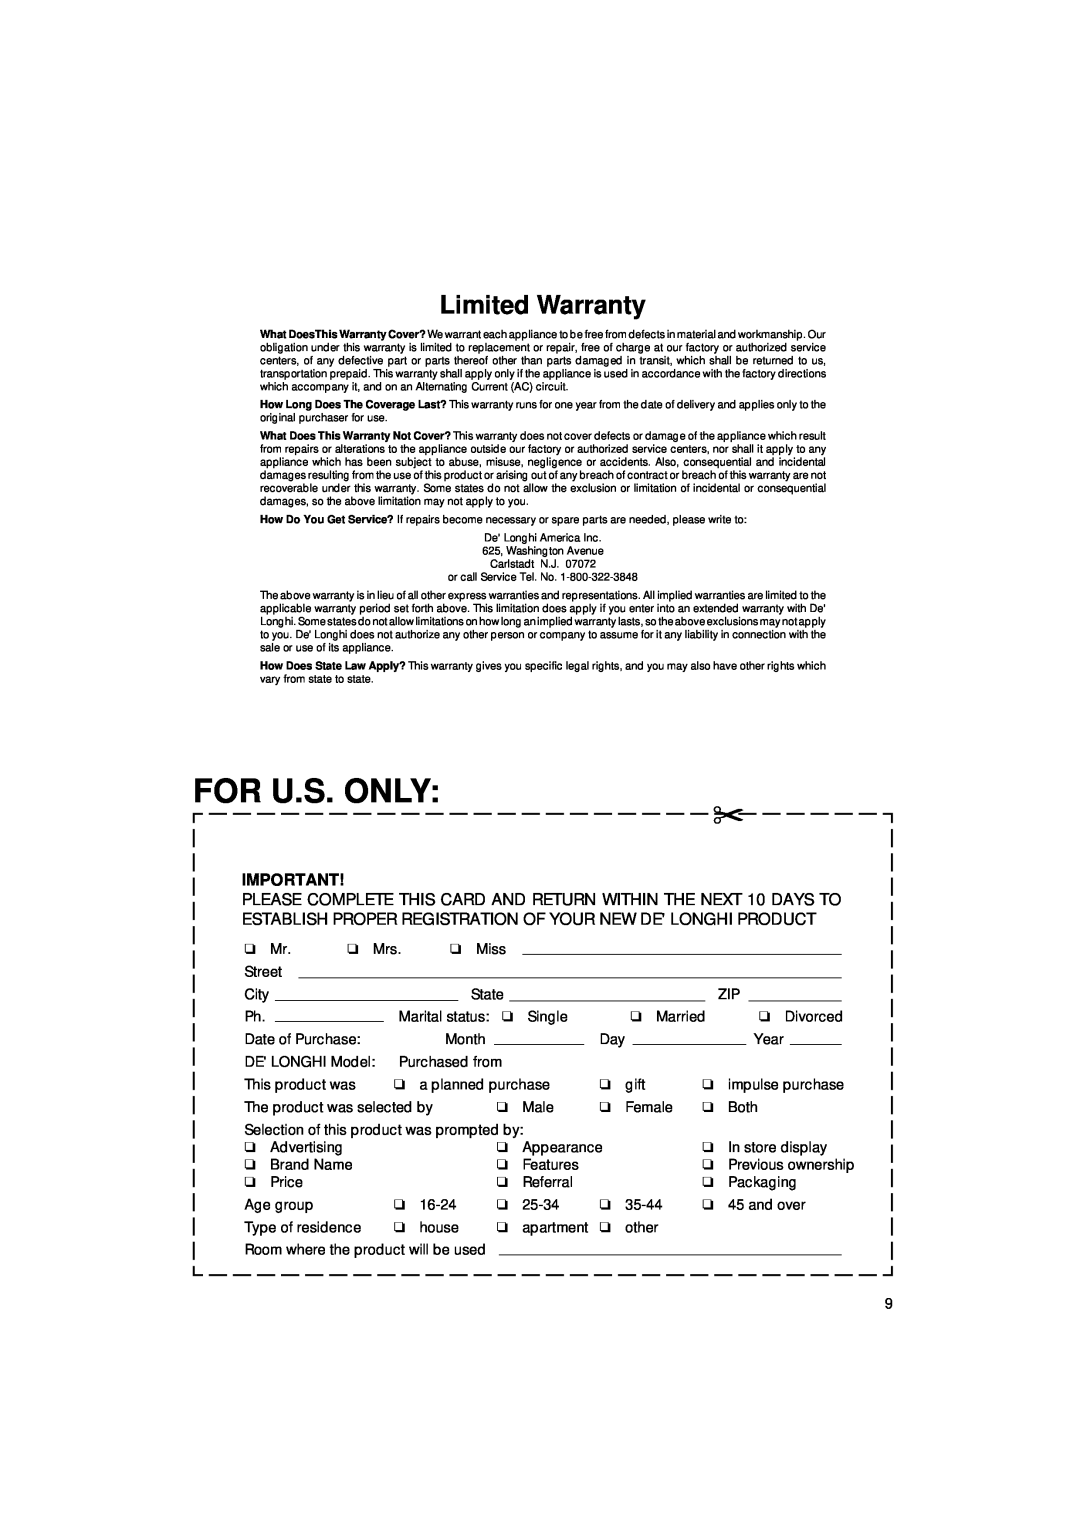 DeLonghi XU15C manual For U.S. Only, Limited Warranty 